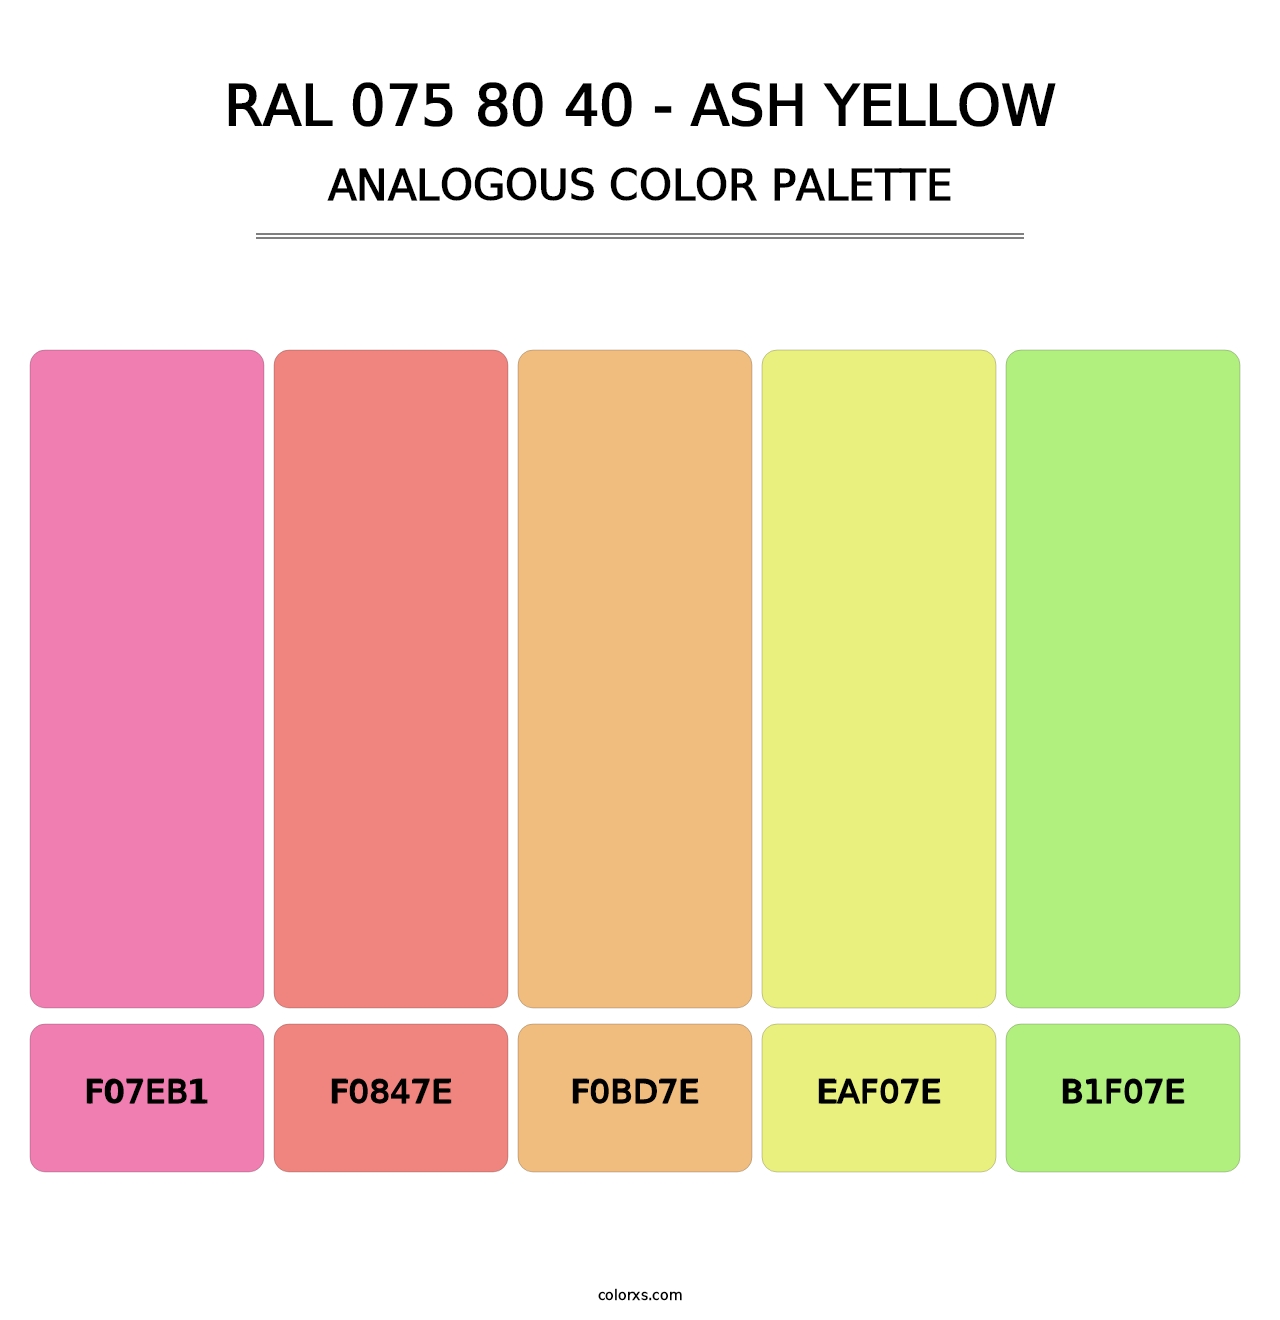 RAL 075 80 40 - Ash Yellow - Analogous Color Palette